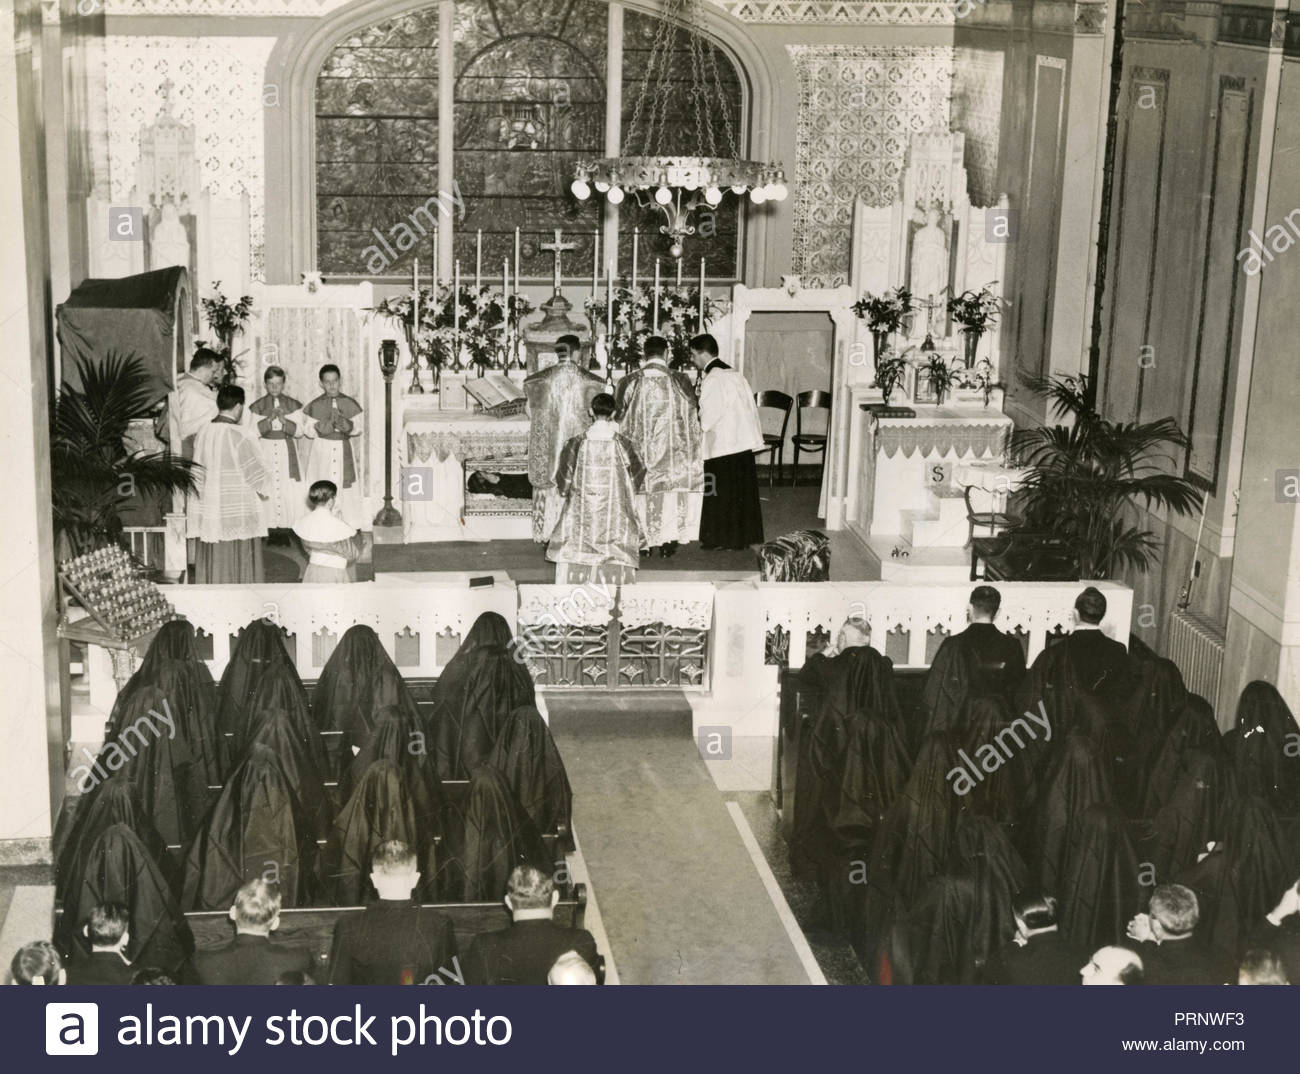 rev stephen fiedler and rev cicognani celebrating mass at mother cabrinis tomb new york usa 1938 PRNWF3